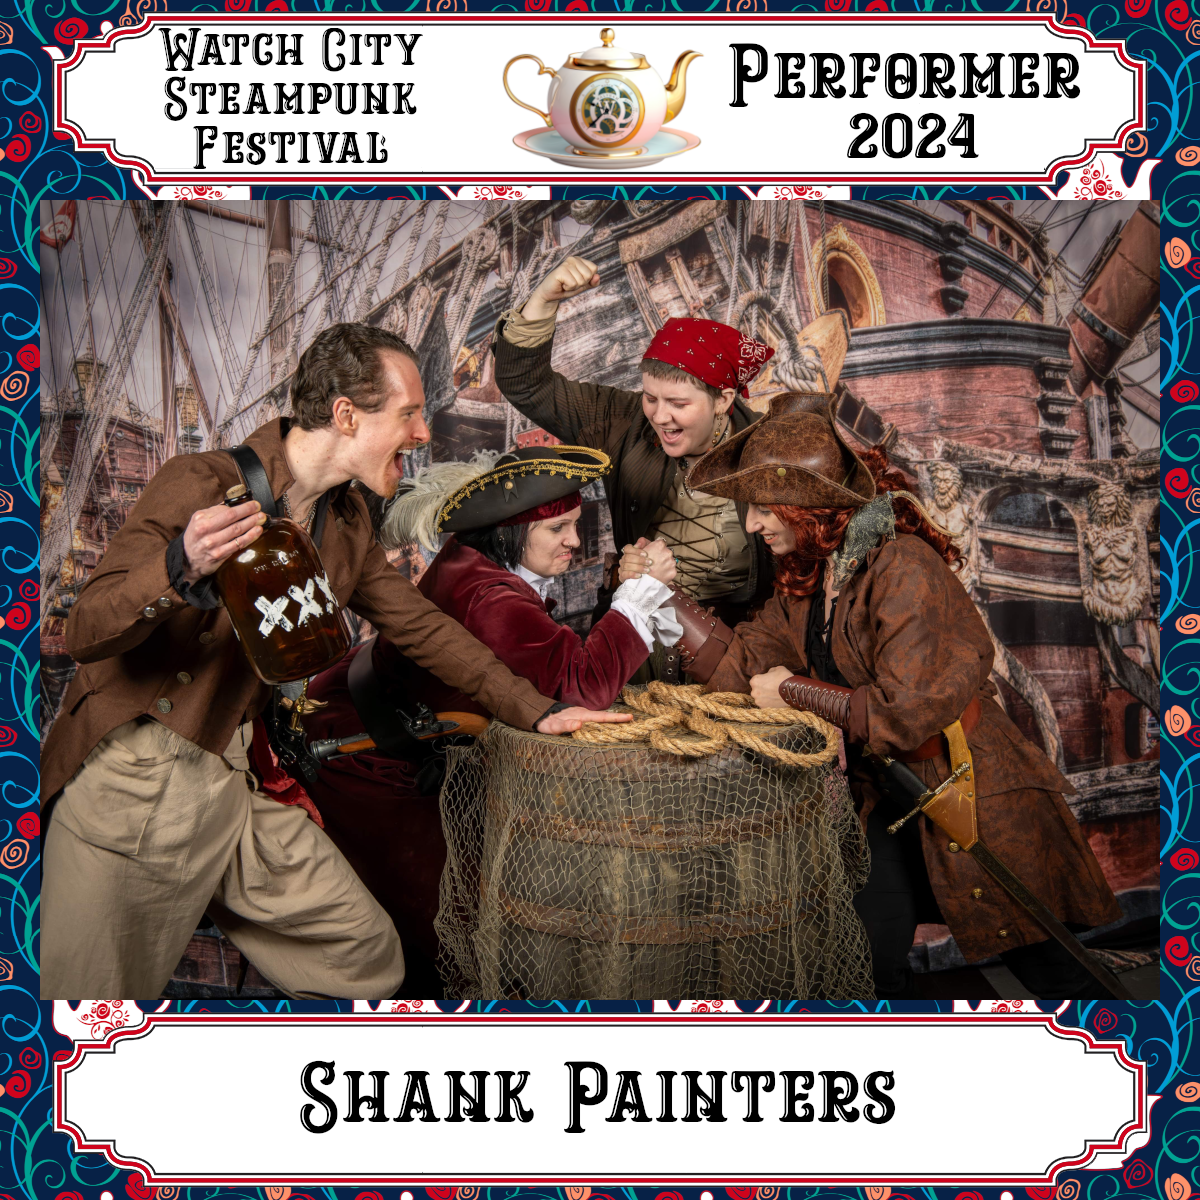 Shank Painters